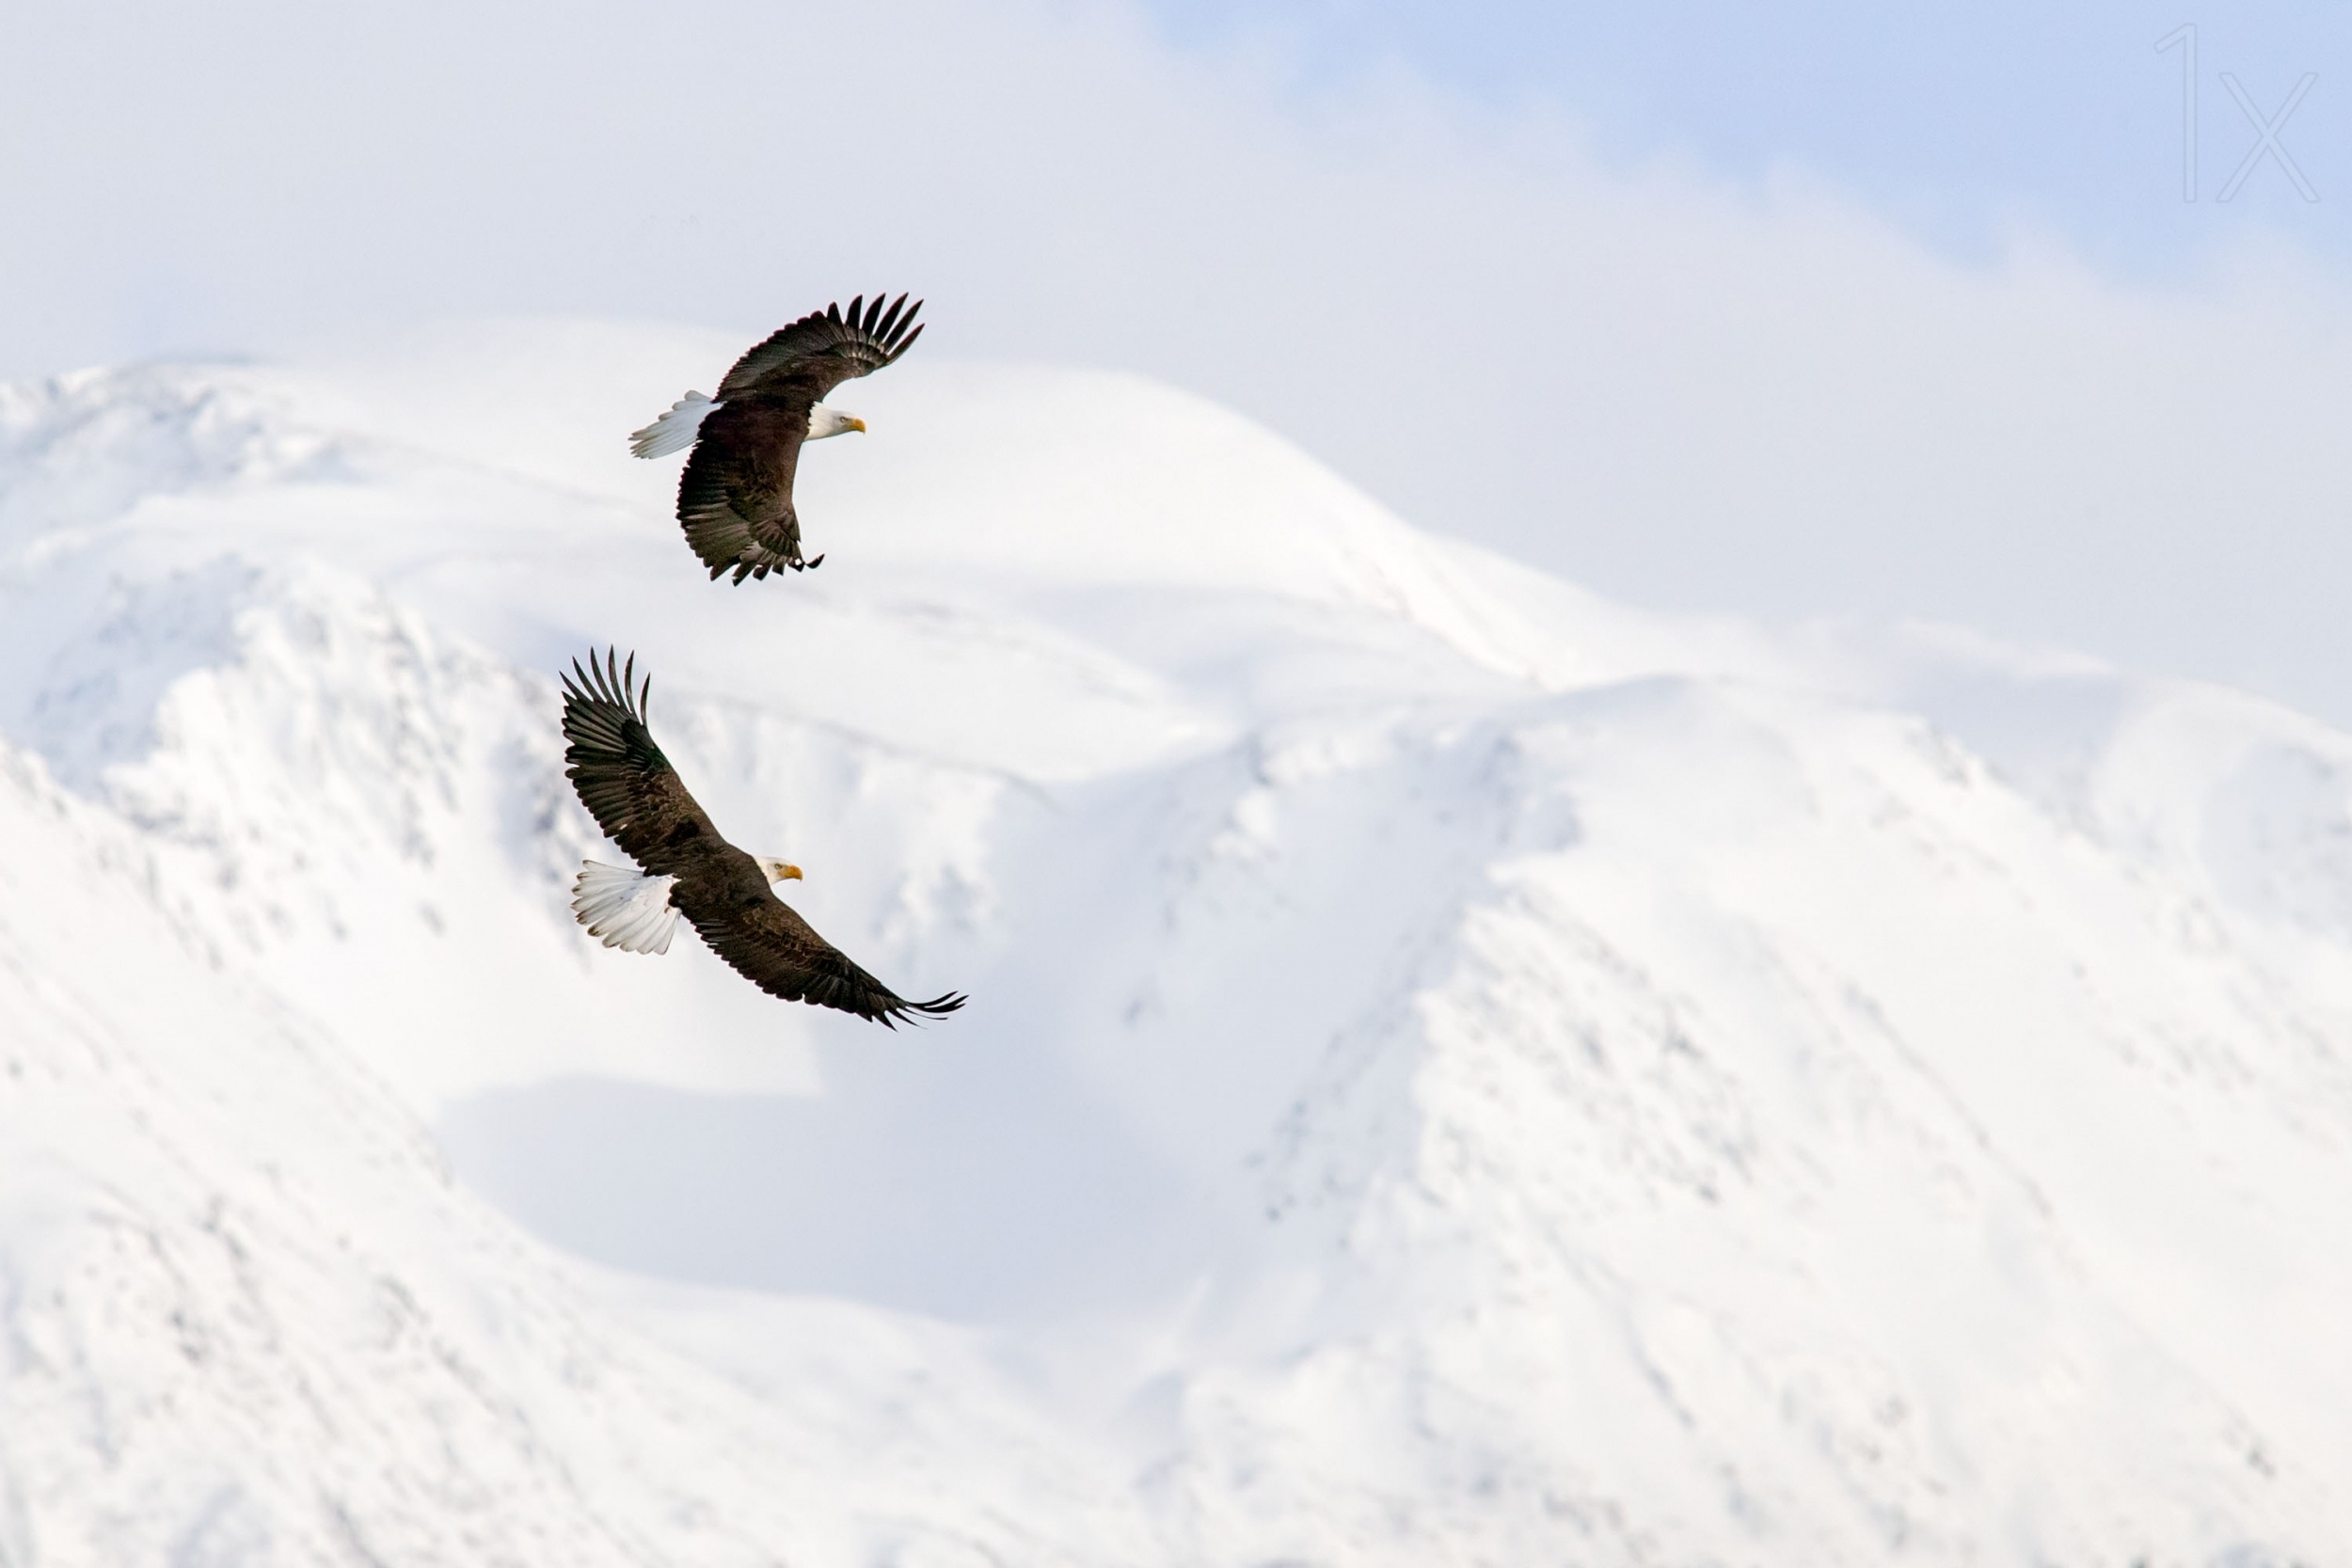 4 орла летящие. Два орла в небе. Птица в полете. Птицы в горах. Орел парит над горами.